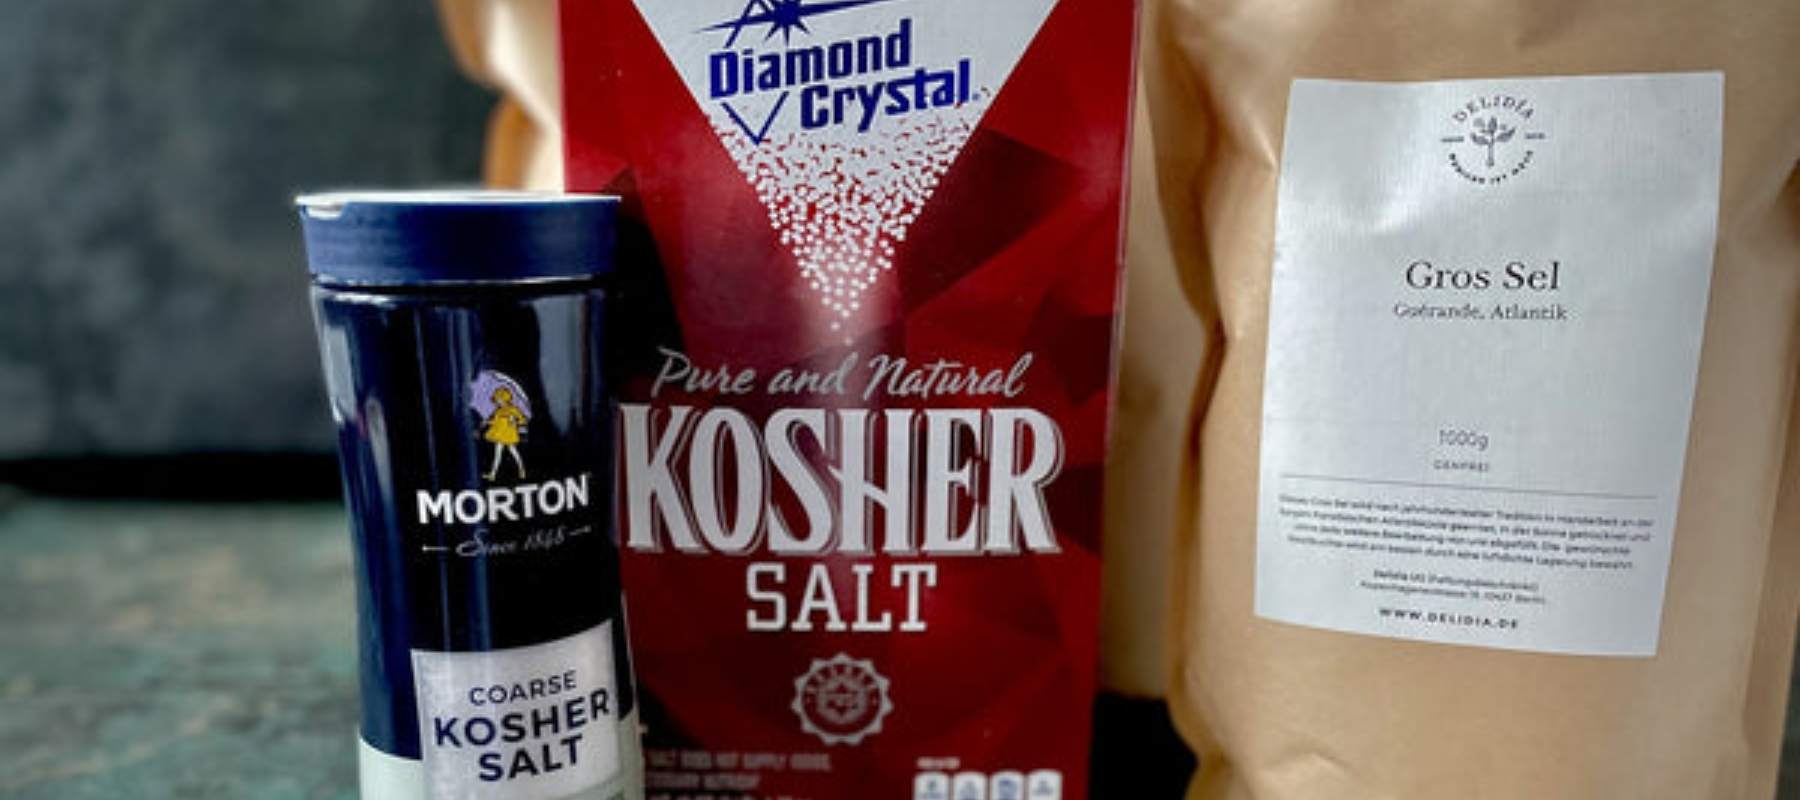 Kosher Salt Kollektion: Morton coarse salt, Diamond Crystal Kosher Salt, Delidía grobes Meersalz